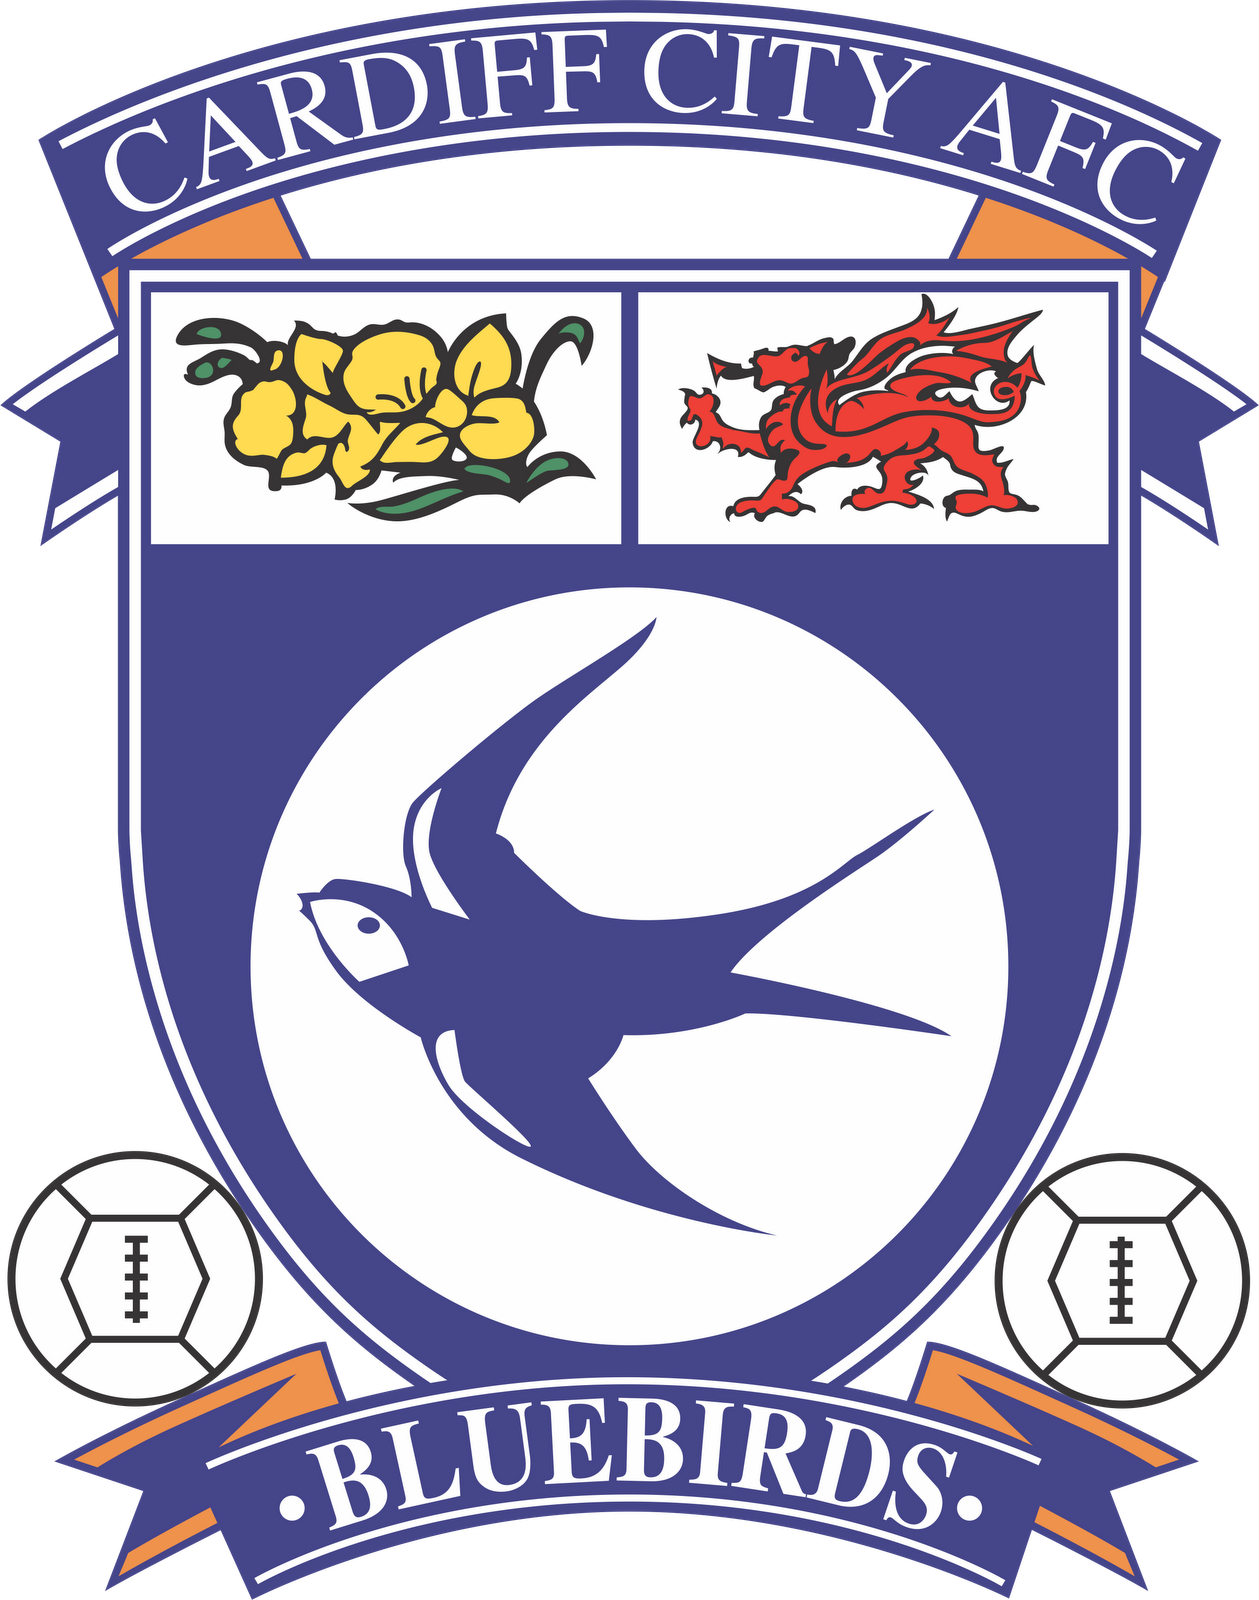 Cardiff City FC (@CardiffCityFC) / X